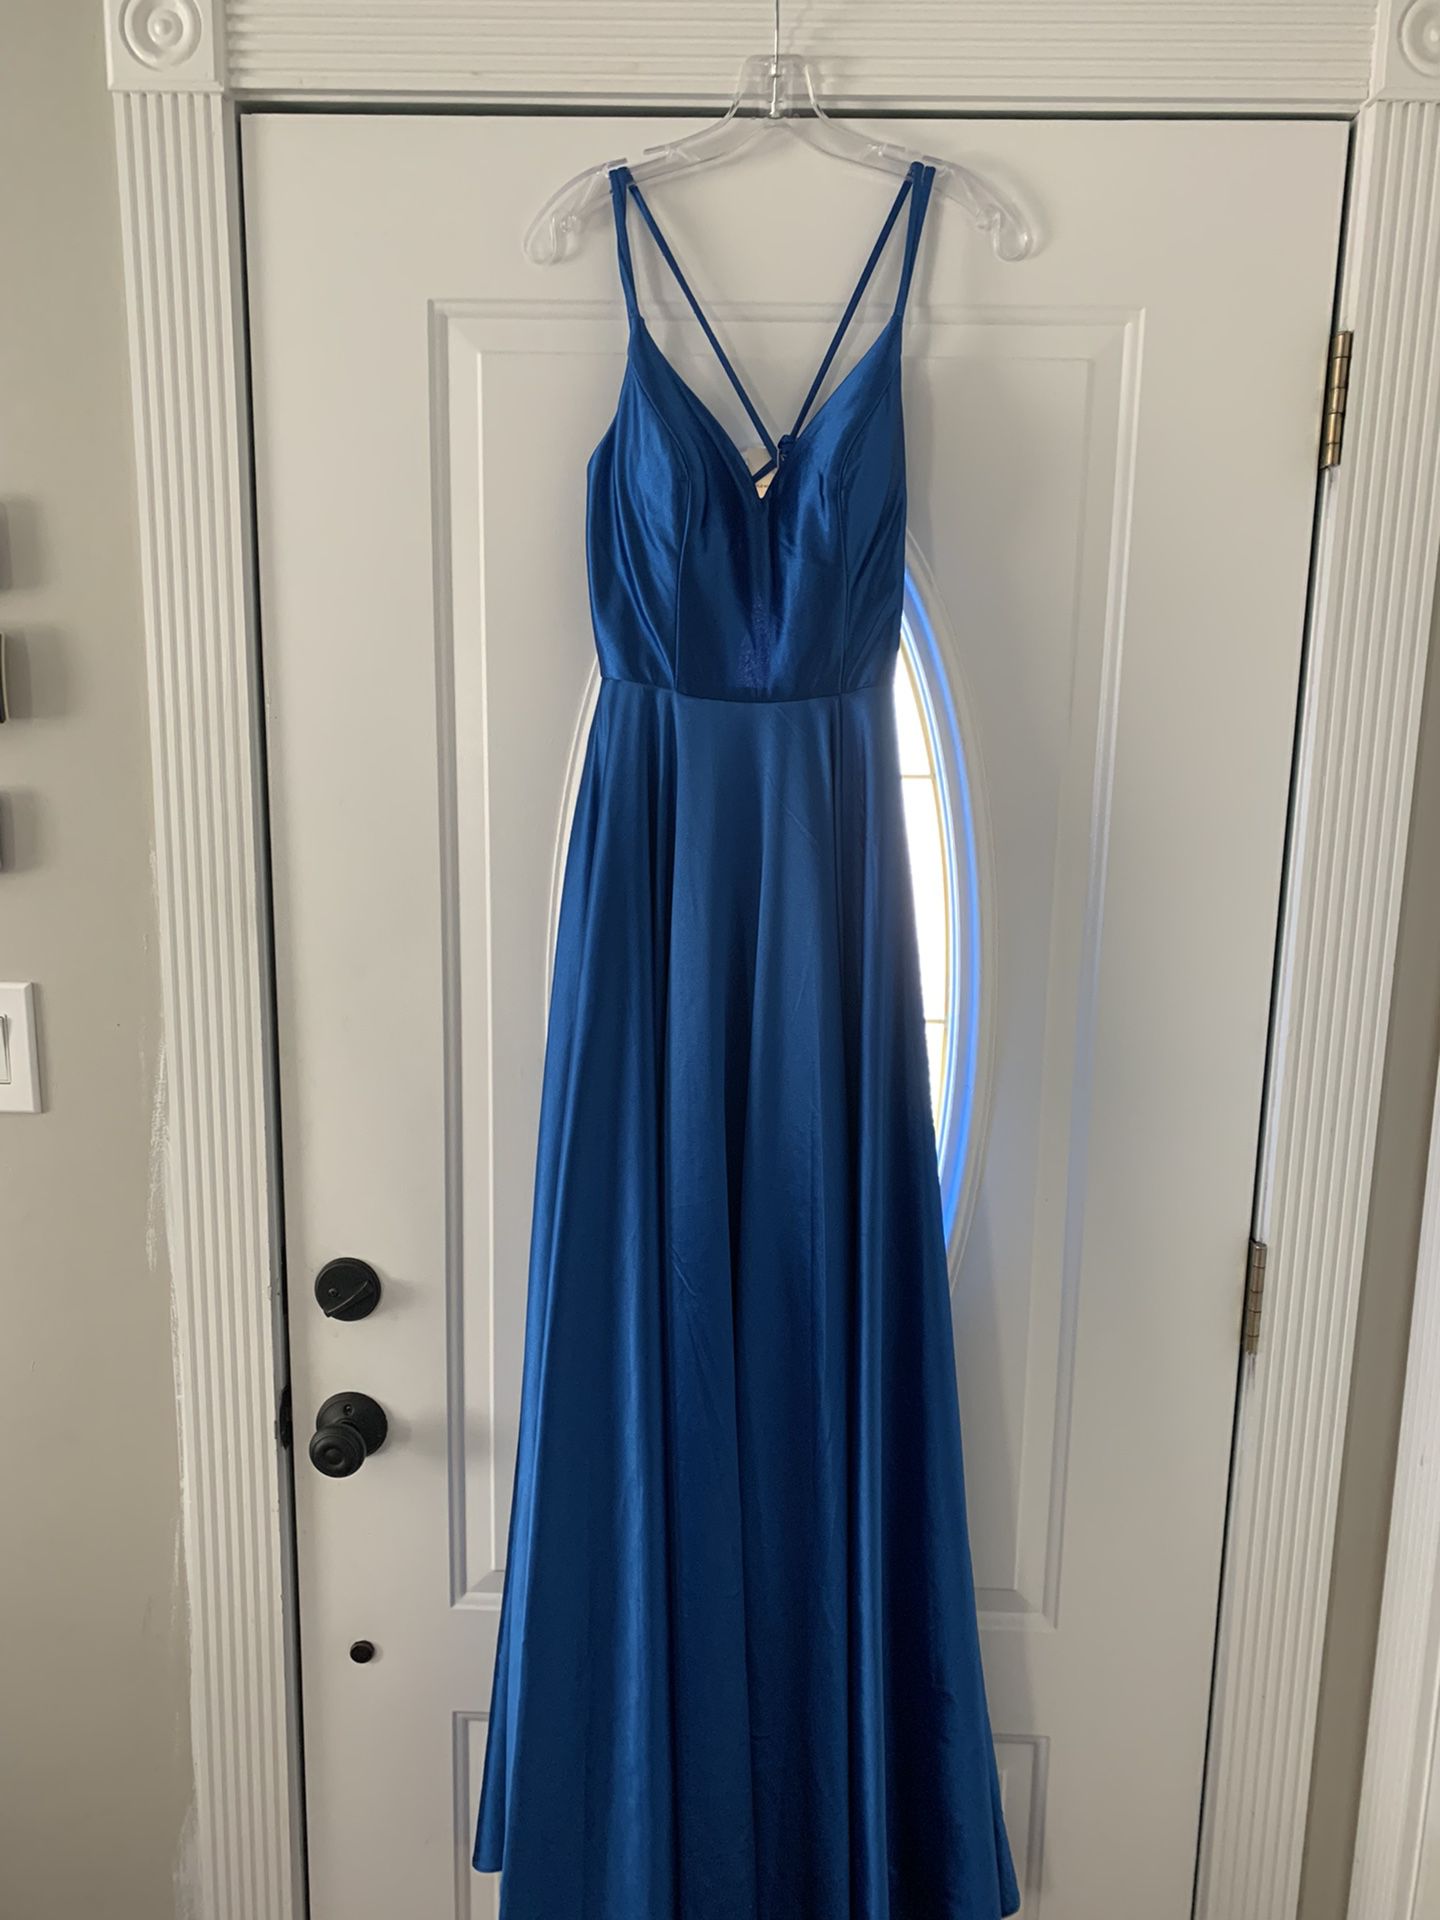 Brand New Royal Blue Prom Dress Size 2